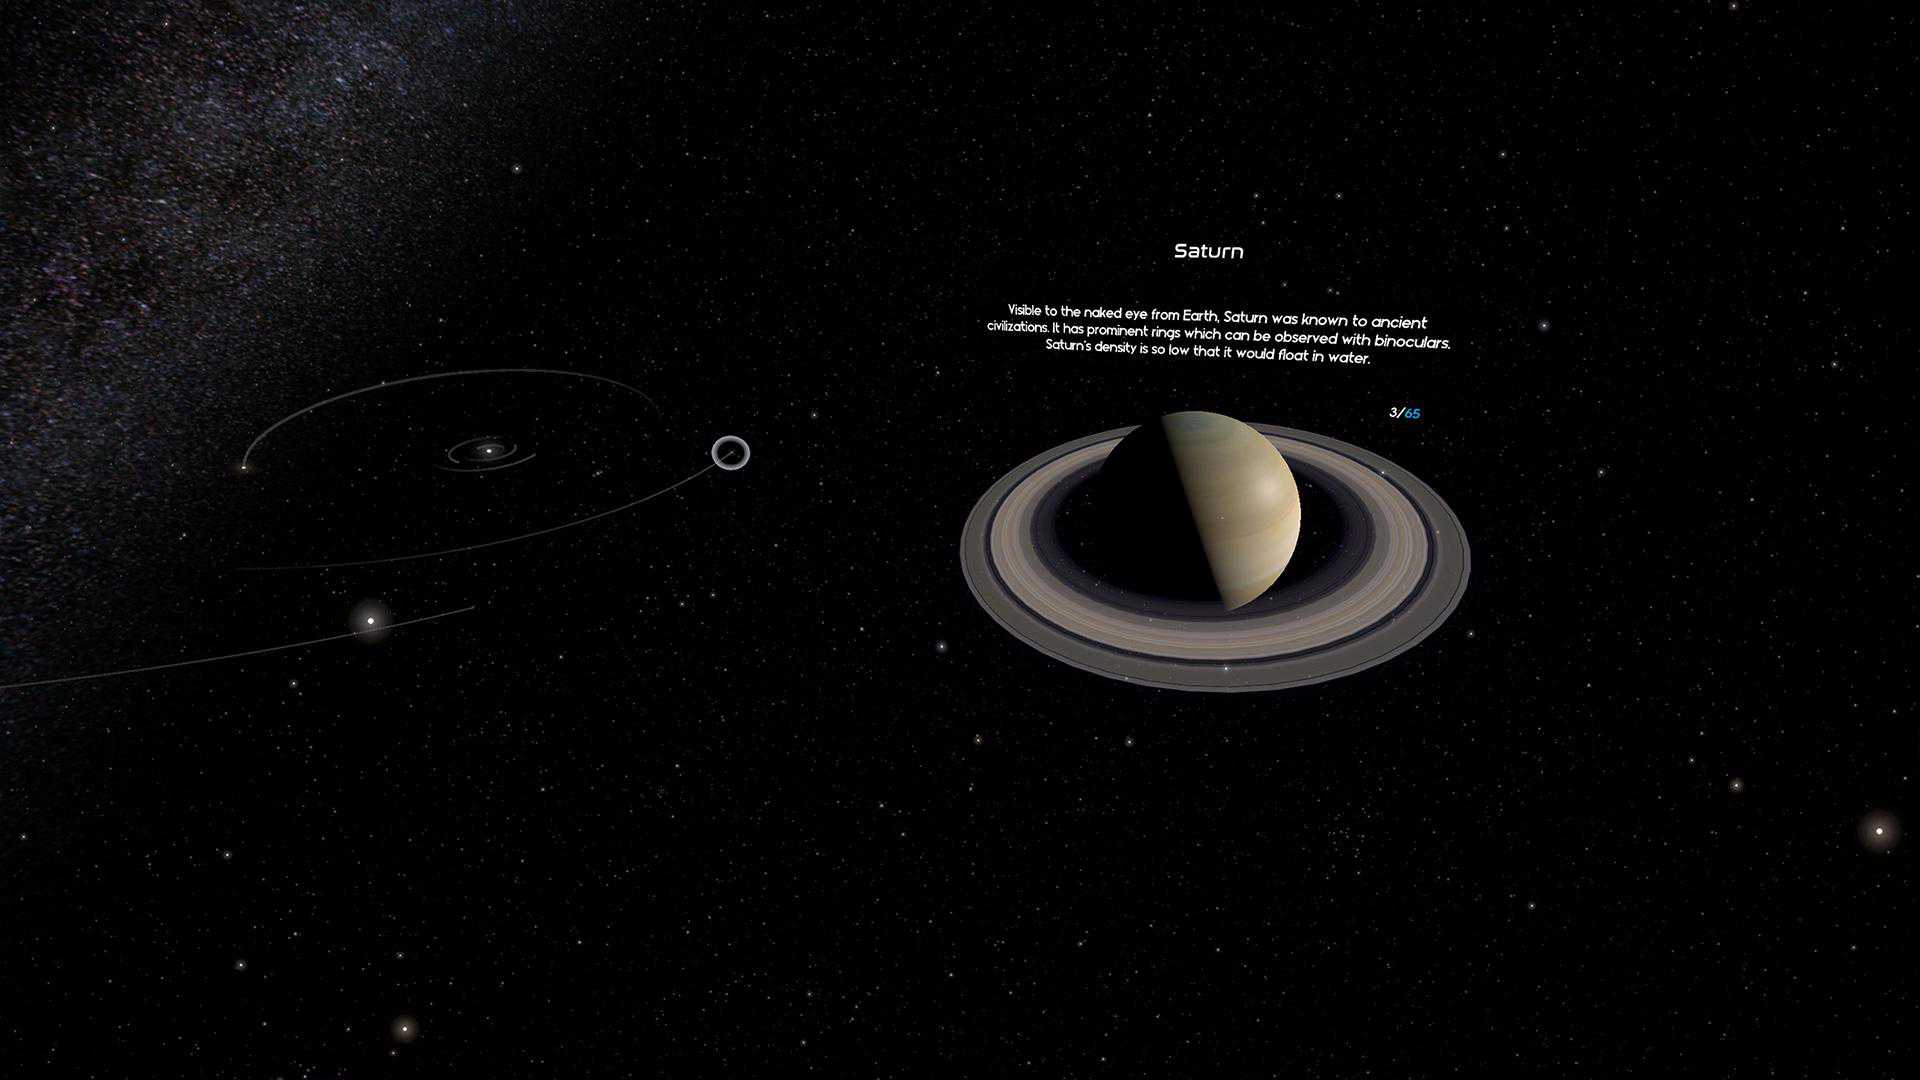 Orders_of_Magnitude_VR-Test-Saturn